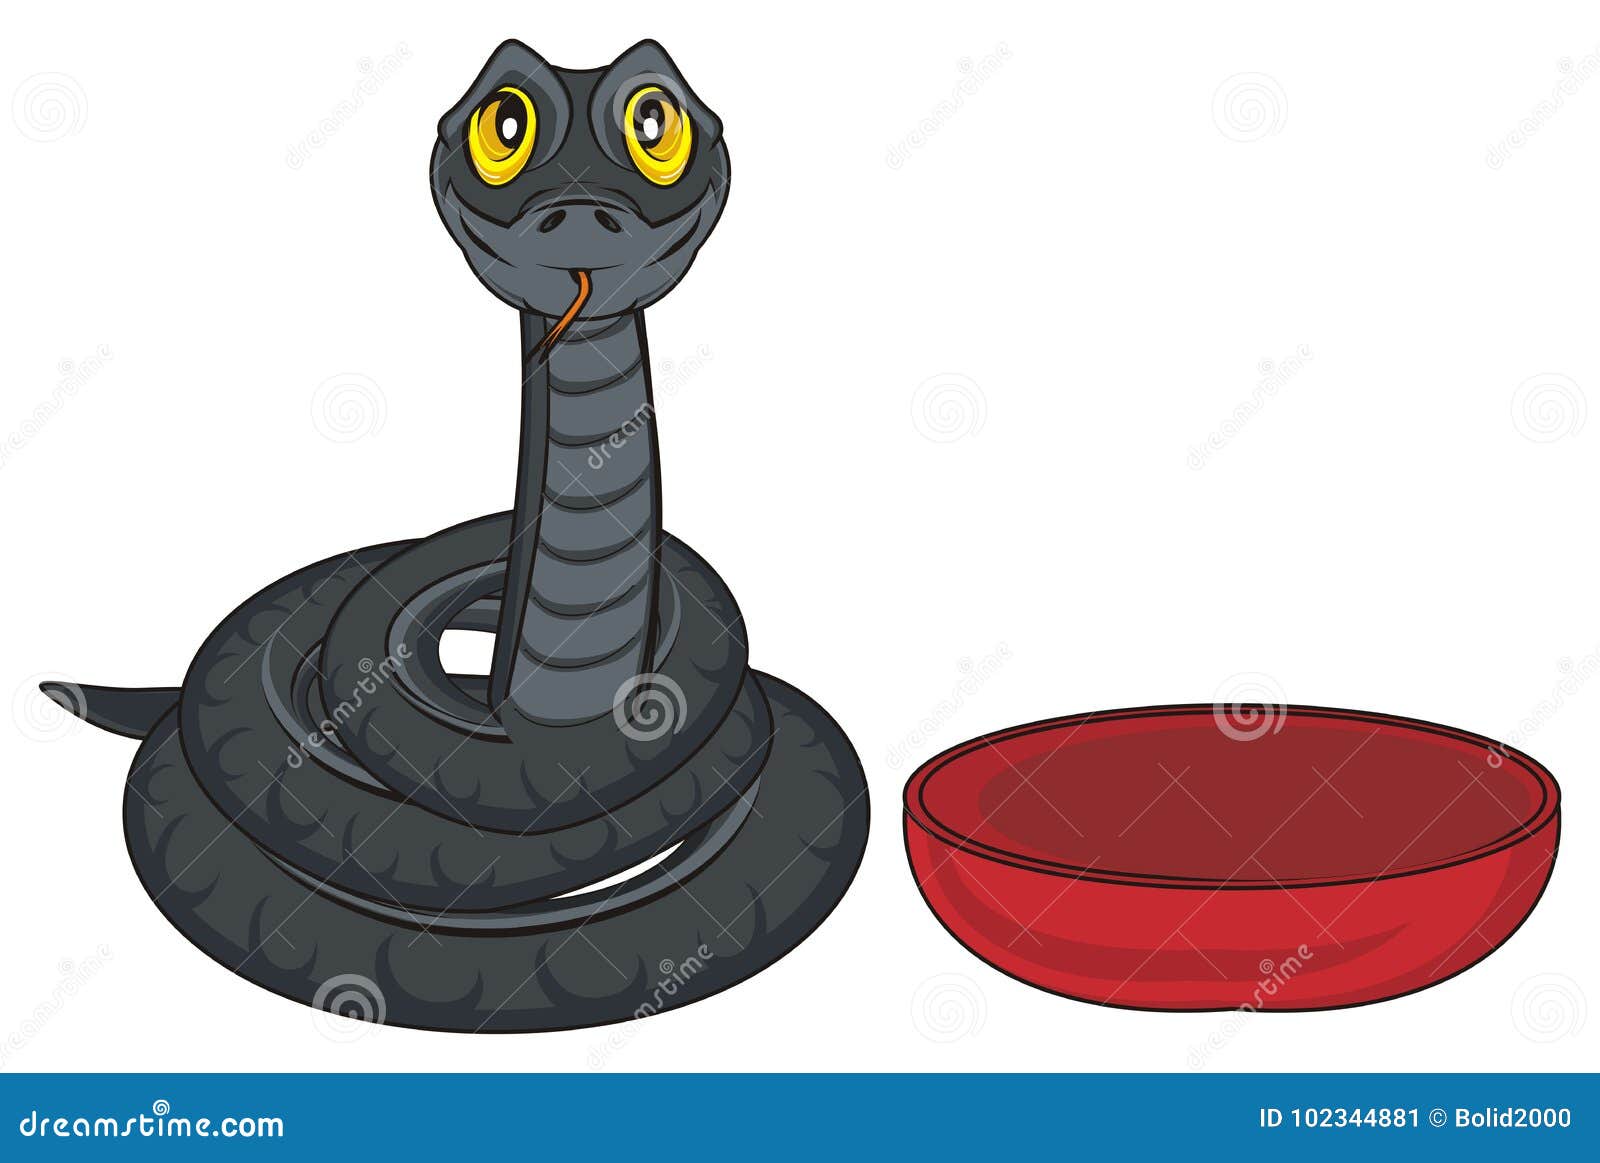 733 Snake Cartoon Stock Photos - Free & Royalty-Free Stock Photos from  Dreamstime